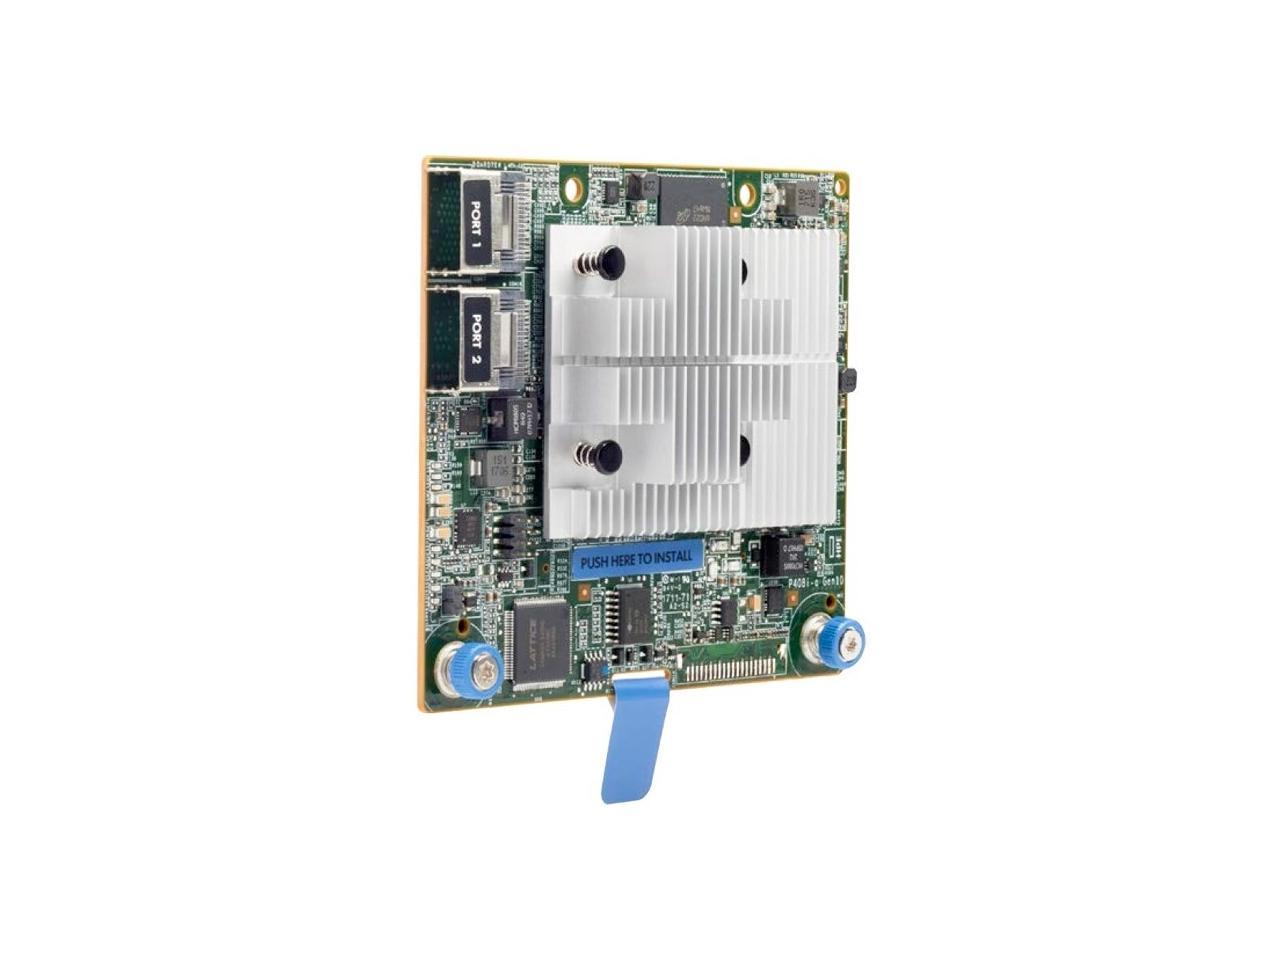 HP 869081-B21 Smart Array P408I-A Sr Gen10 - Storage Controller (Raid) With Low Profile Heatsink - 8 Channel - Sata 6Gb/S / Sas 12Gb/S - 12 Gbit/S - Raid 0, 1, 5, 6, 10, 50, 60, 1 Adm, 10 Adm - Pcie